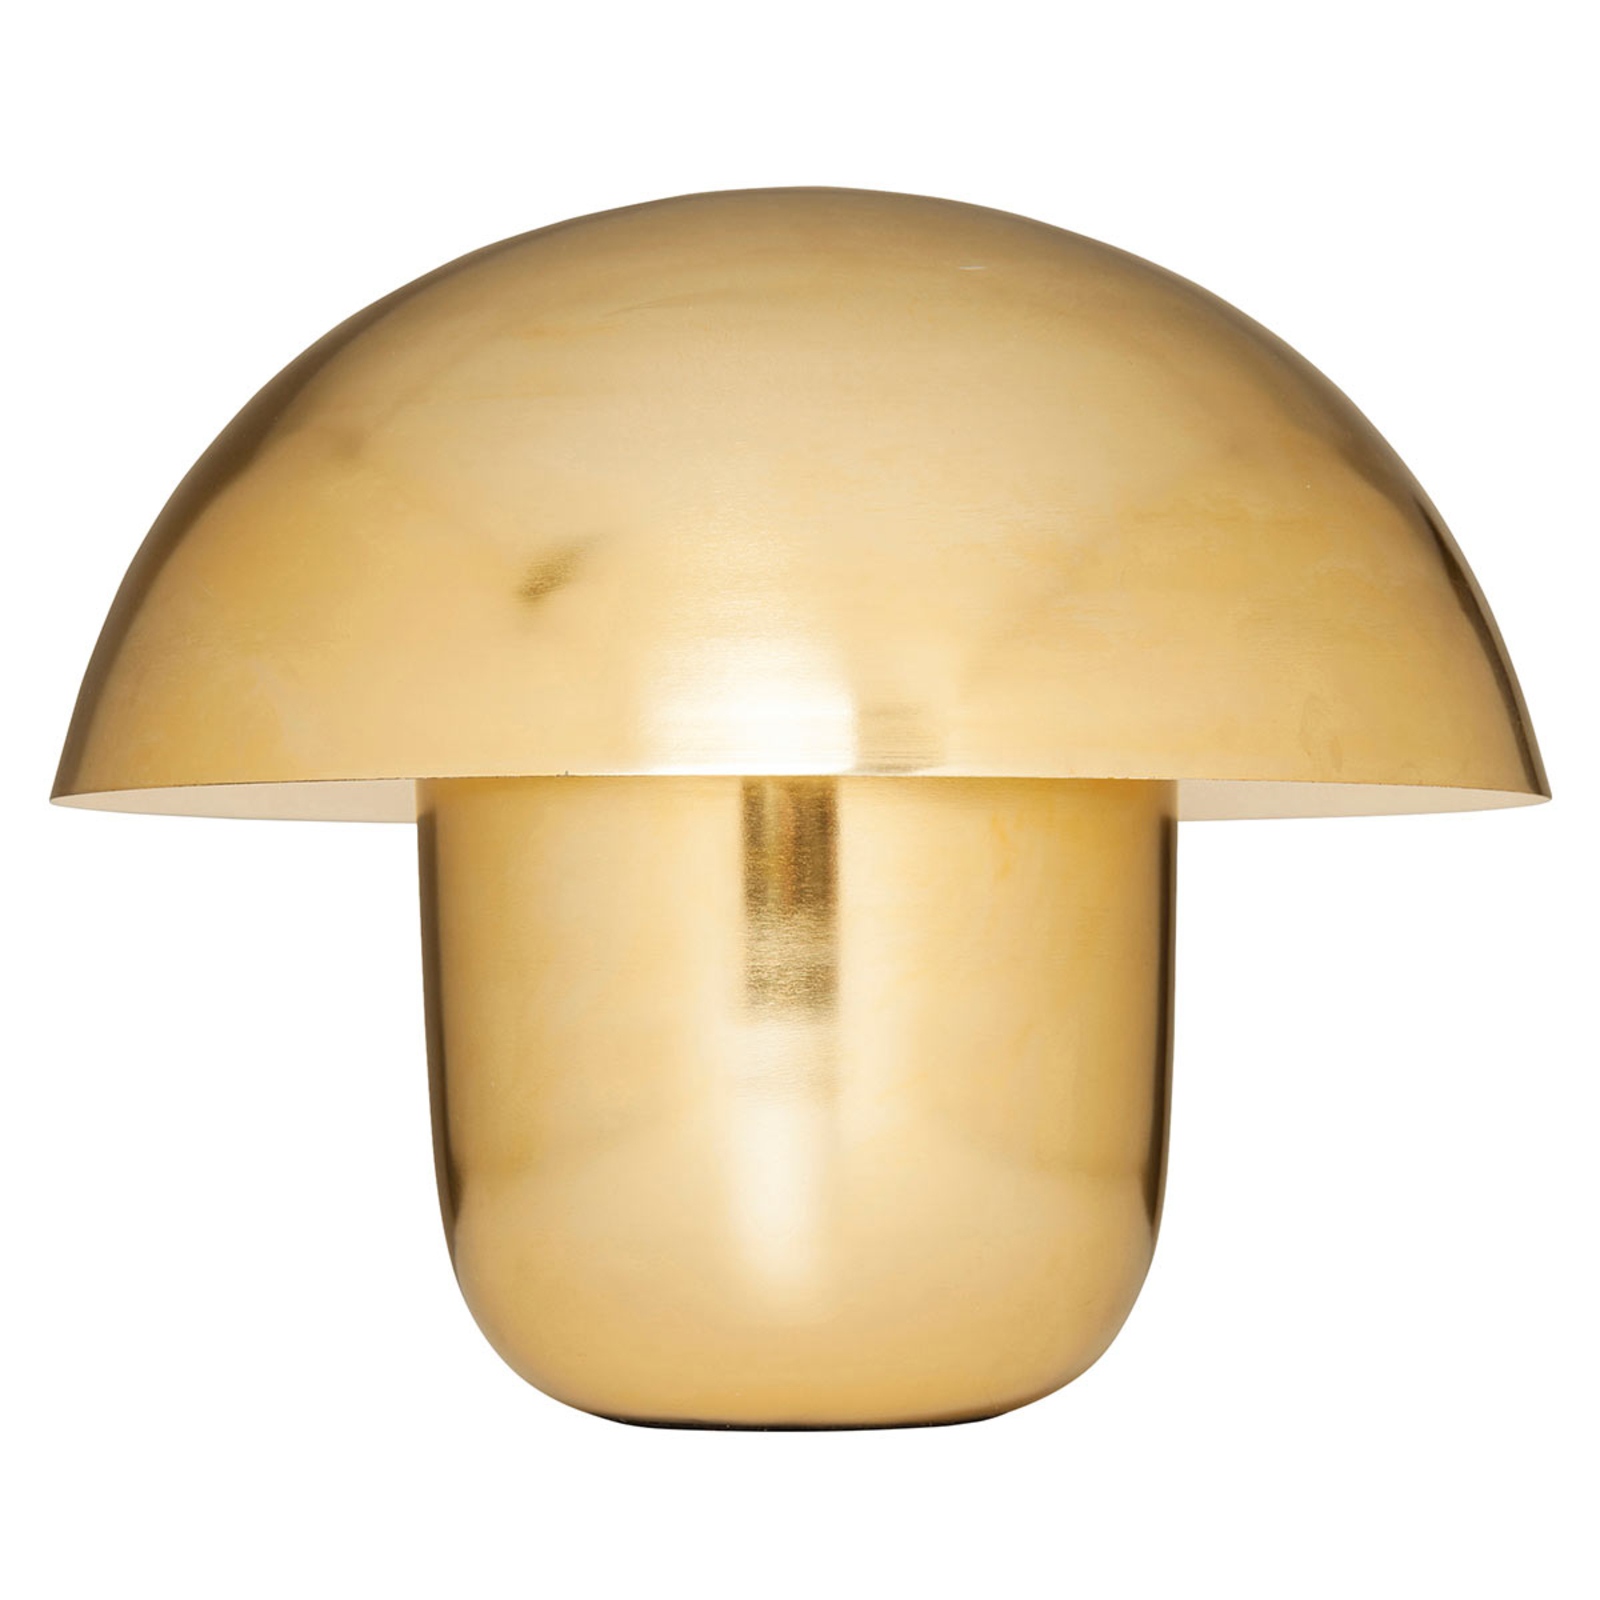 KARE Mushroom - Sēnes formas galda lampa, zelta krāsā